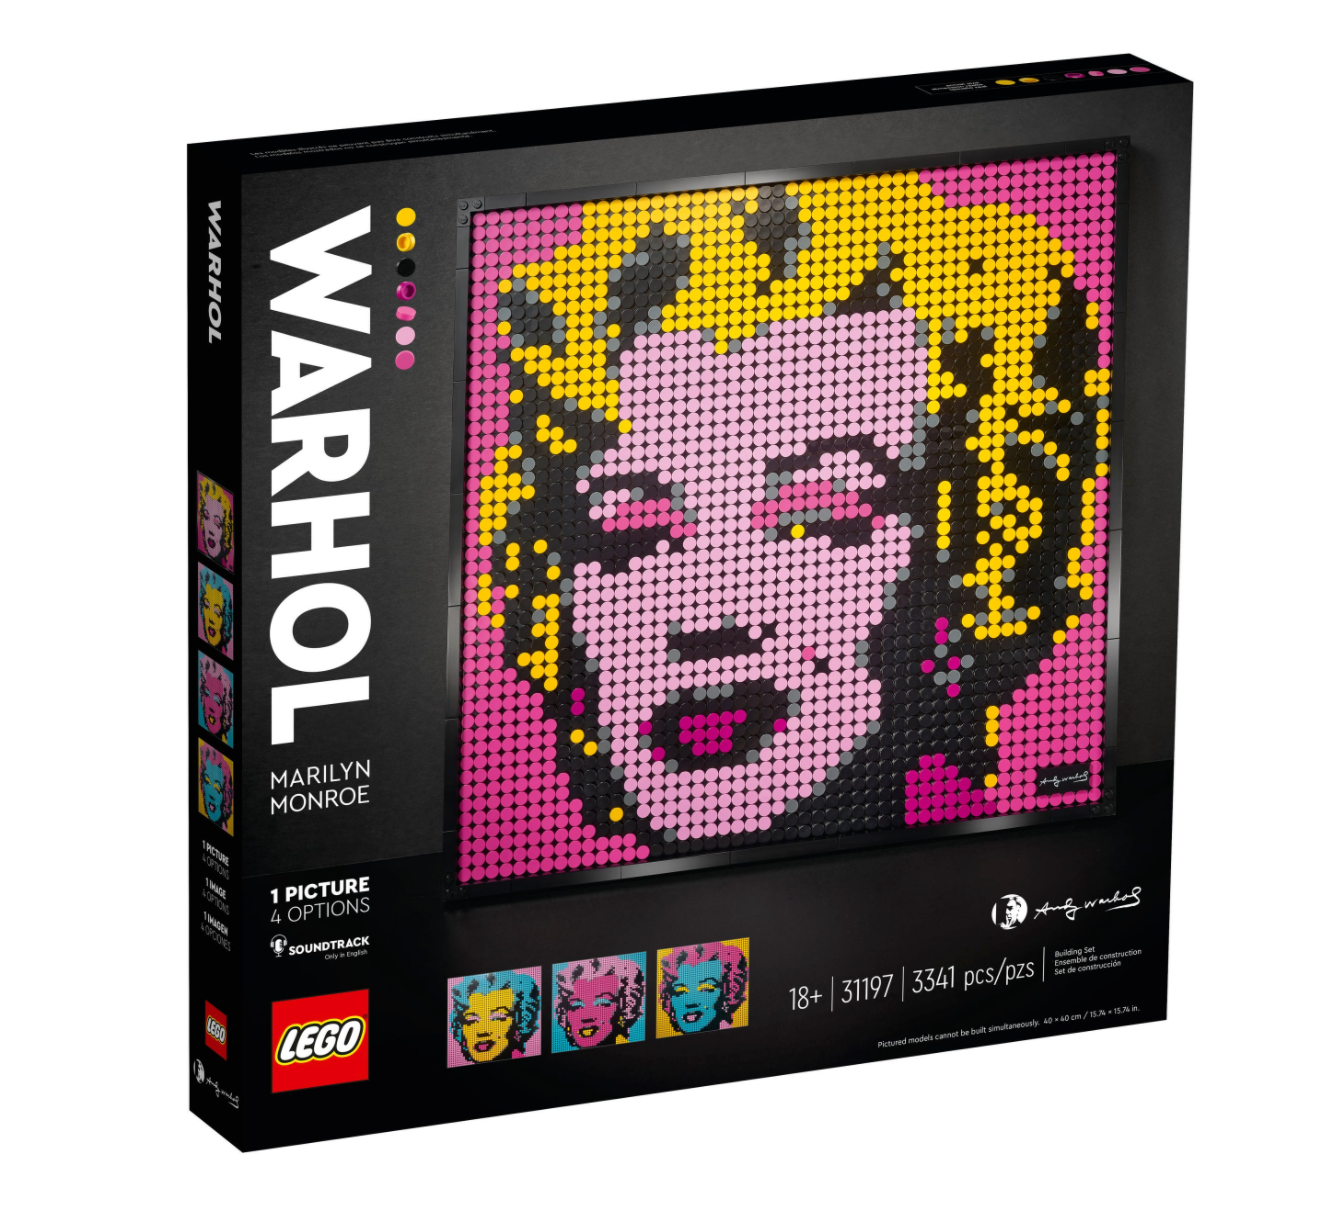 LEGO: ART - Andy Warhol's Marilyn Monroe